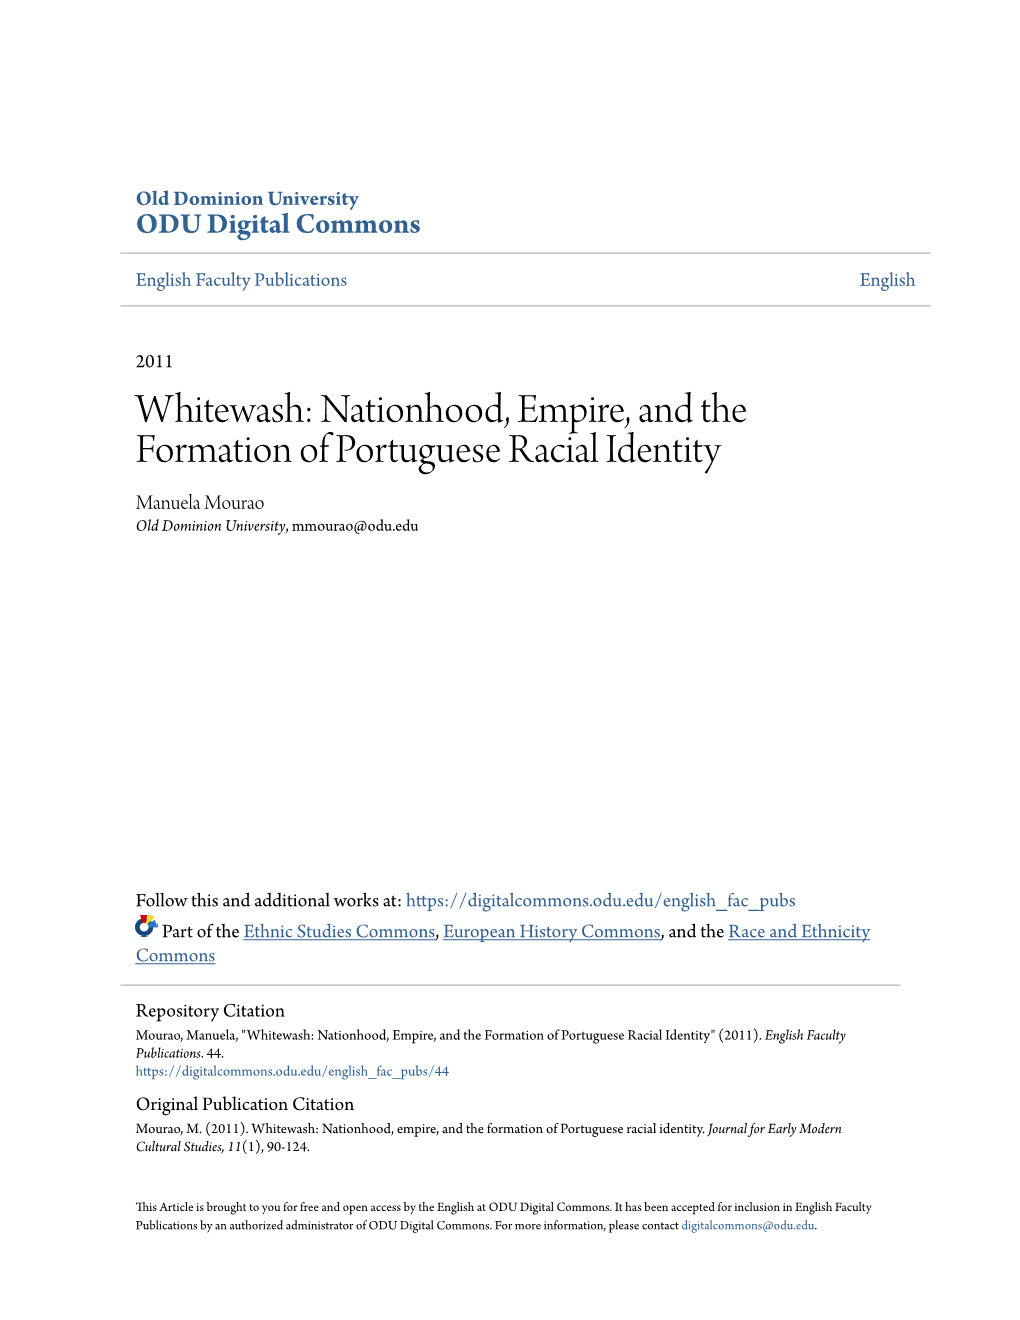 Whitewash: Nationhood, Empire, and the Formation of Portuguese Racial Identity Manuela Mourao Old Dominion University, Mmourao@Odu.Edu